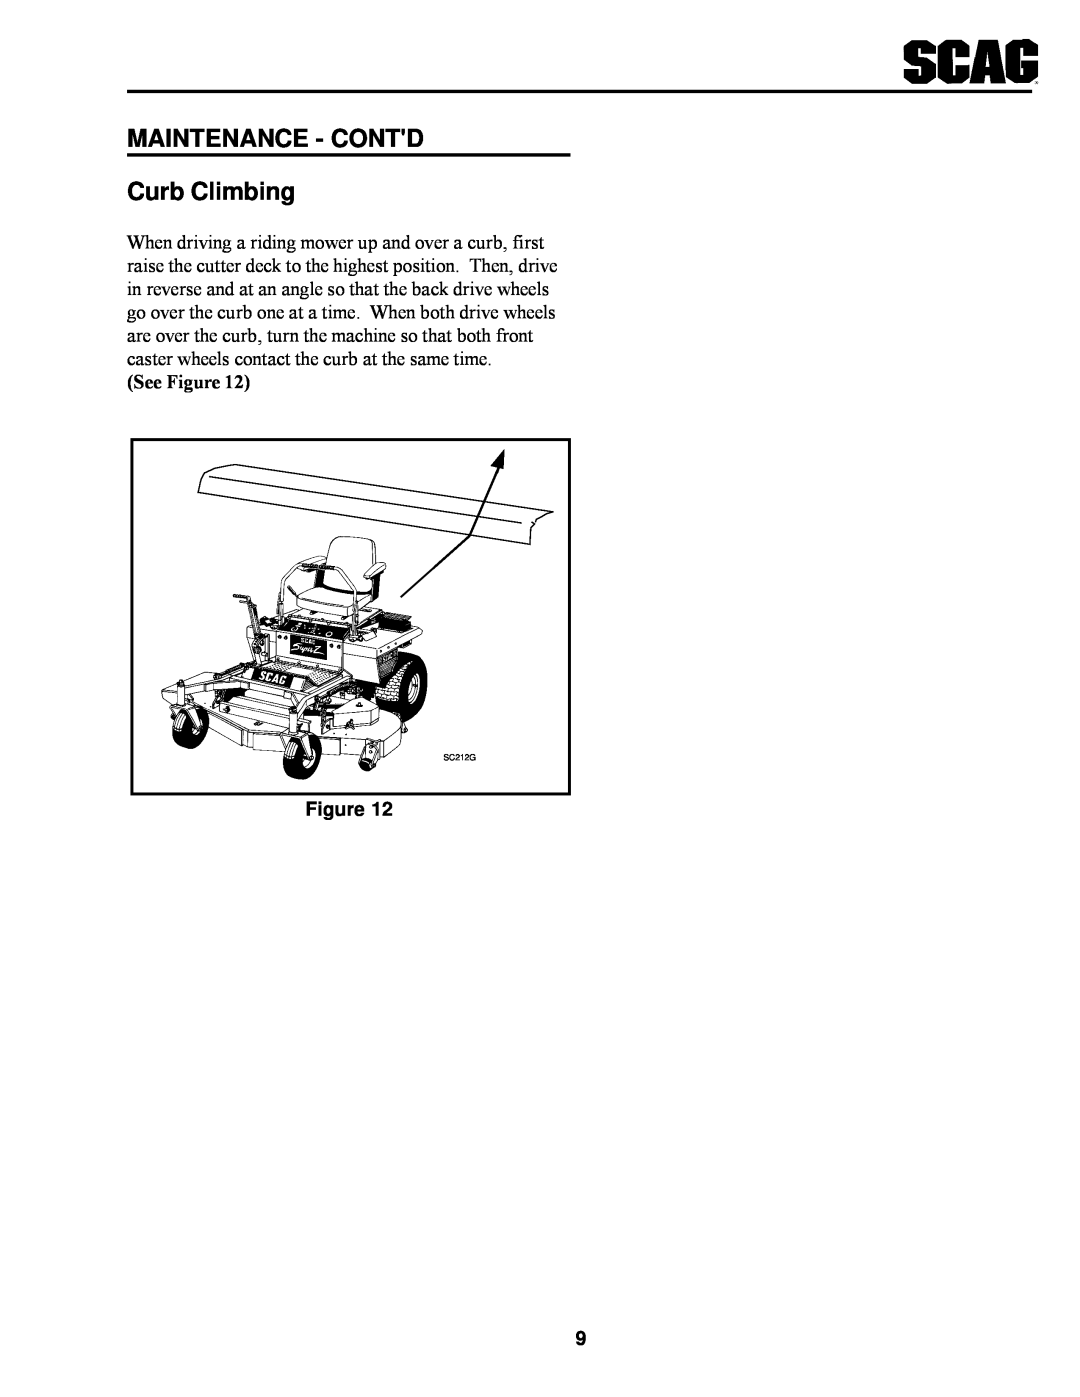 Scag Power Equipment SSZ operating instructions MAINTENANCE - CONTD Curb Climbing, See Figure, SC212G 